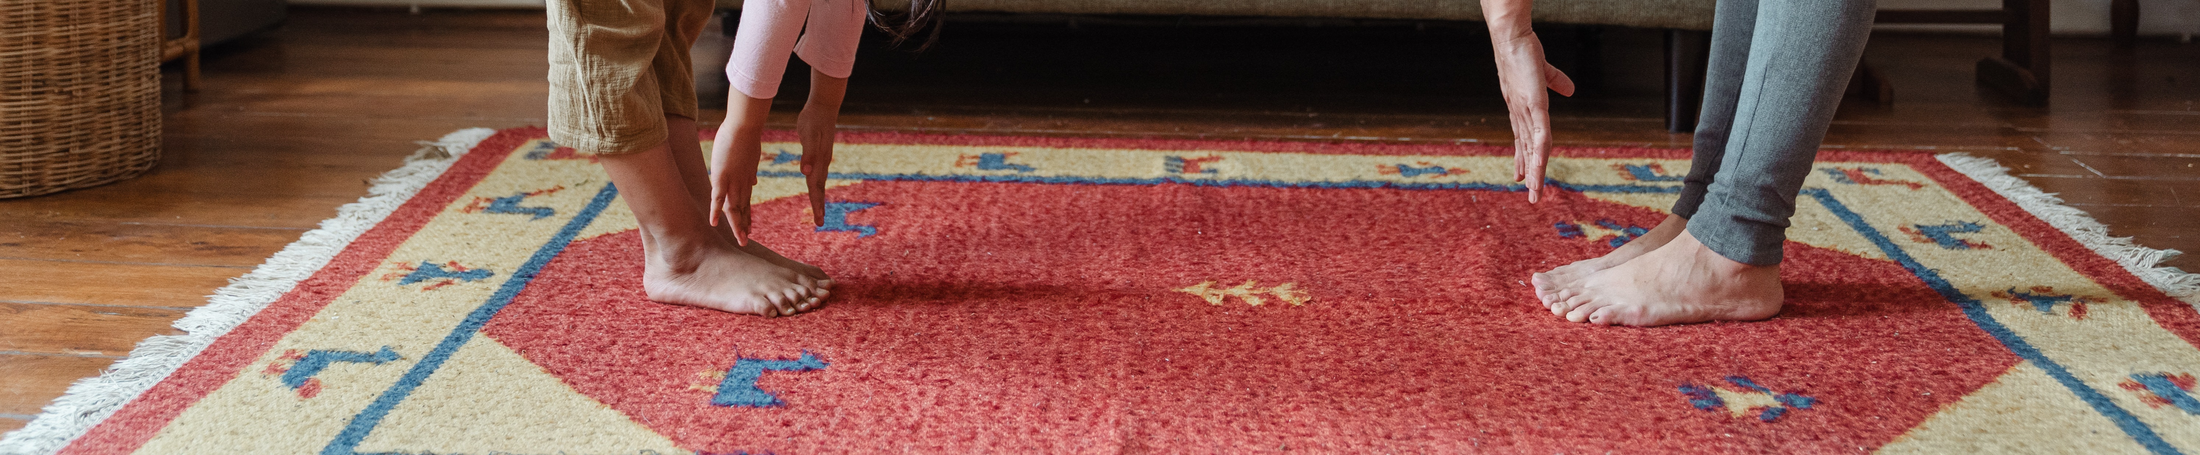  ITSOFT Non Slip Area Rug Pad Carpet Underlay Mat on Hard Floor  Runner Extra Strong Grip, 2 x 3 Feet : Home & Kitchen